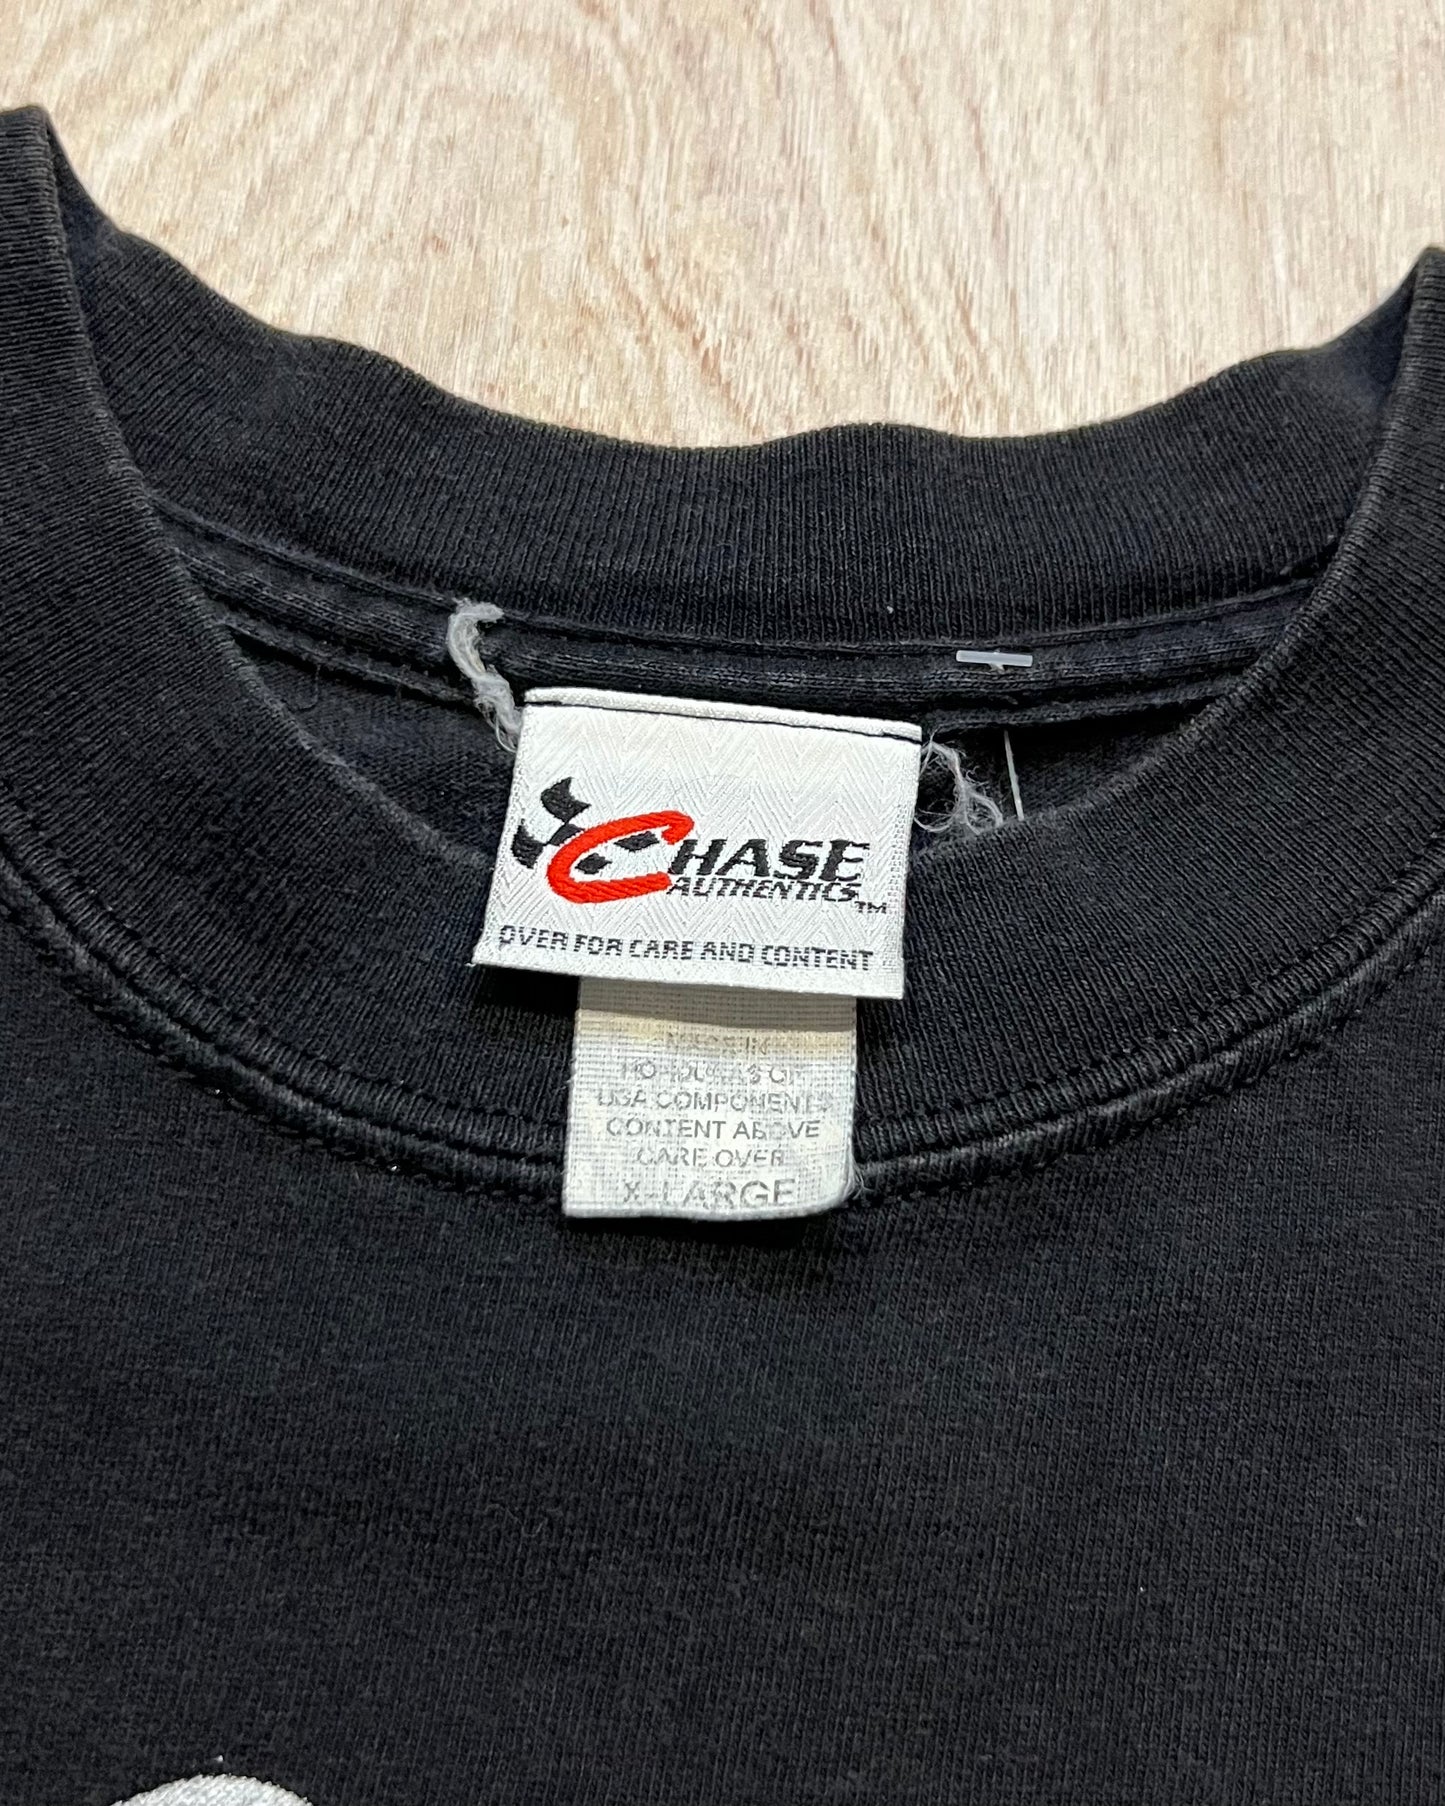 Dale Earnhardt #3 Chase Authentics Graphic T-Shirt